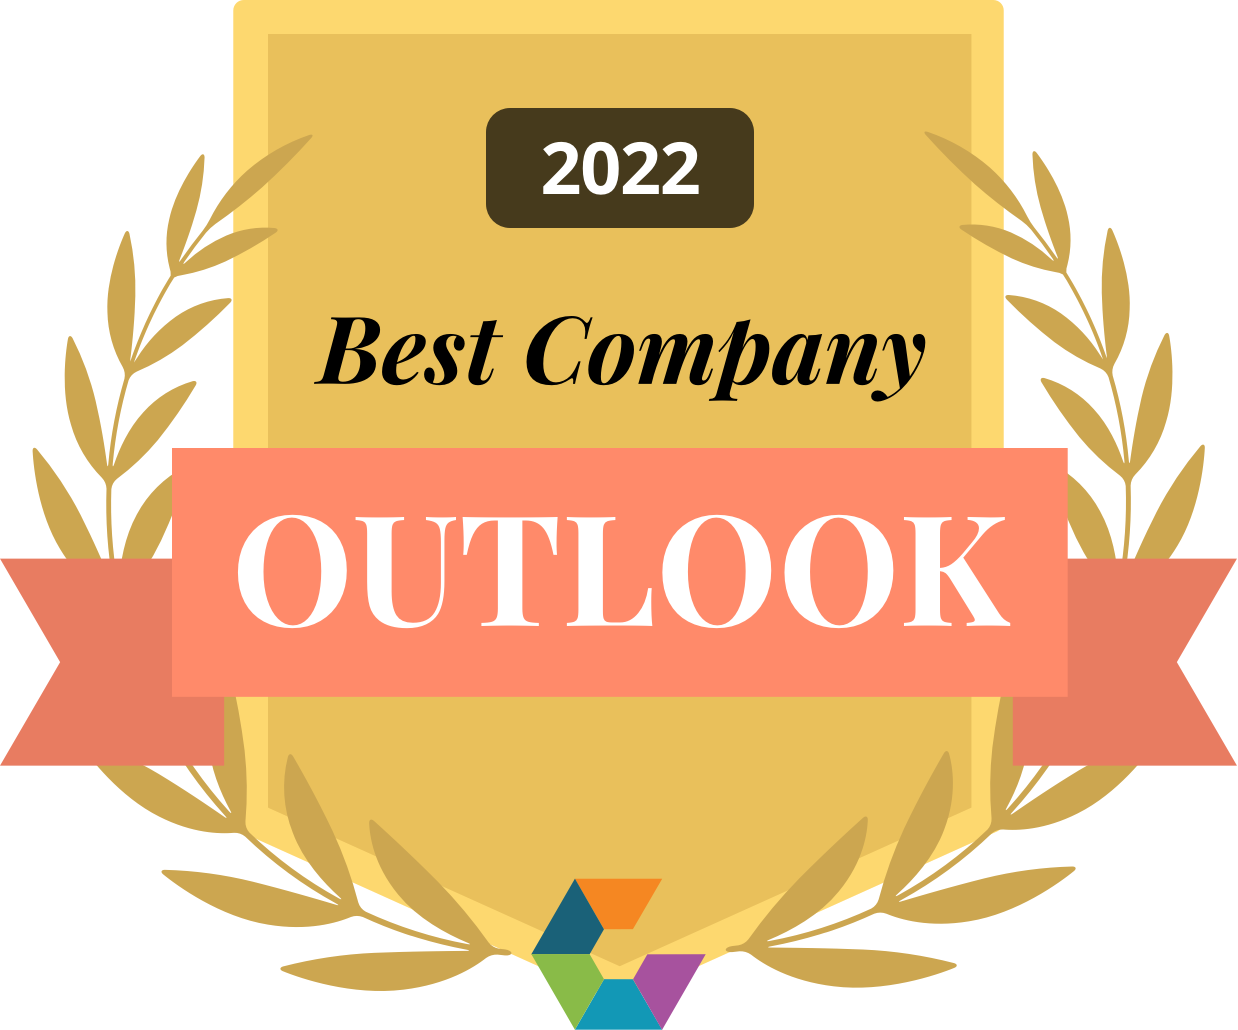 Best Company Outlook 2022 award